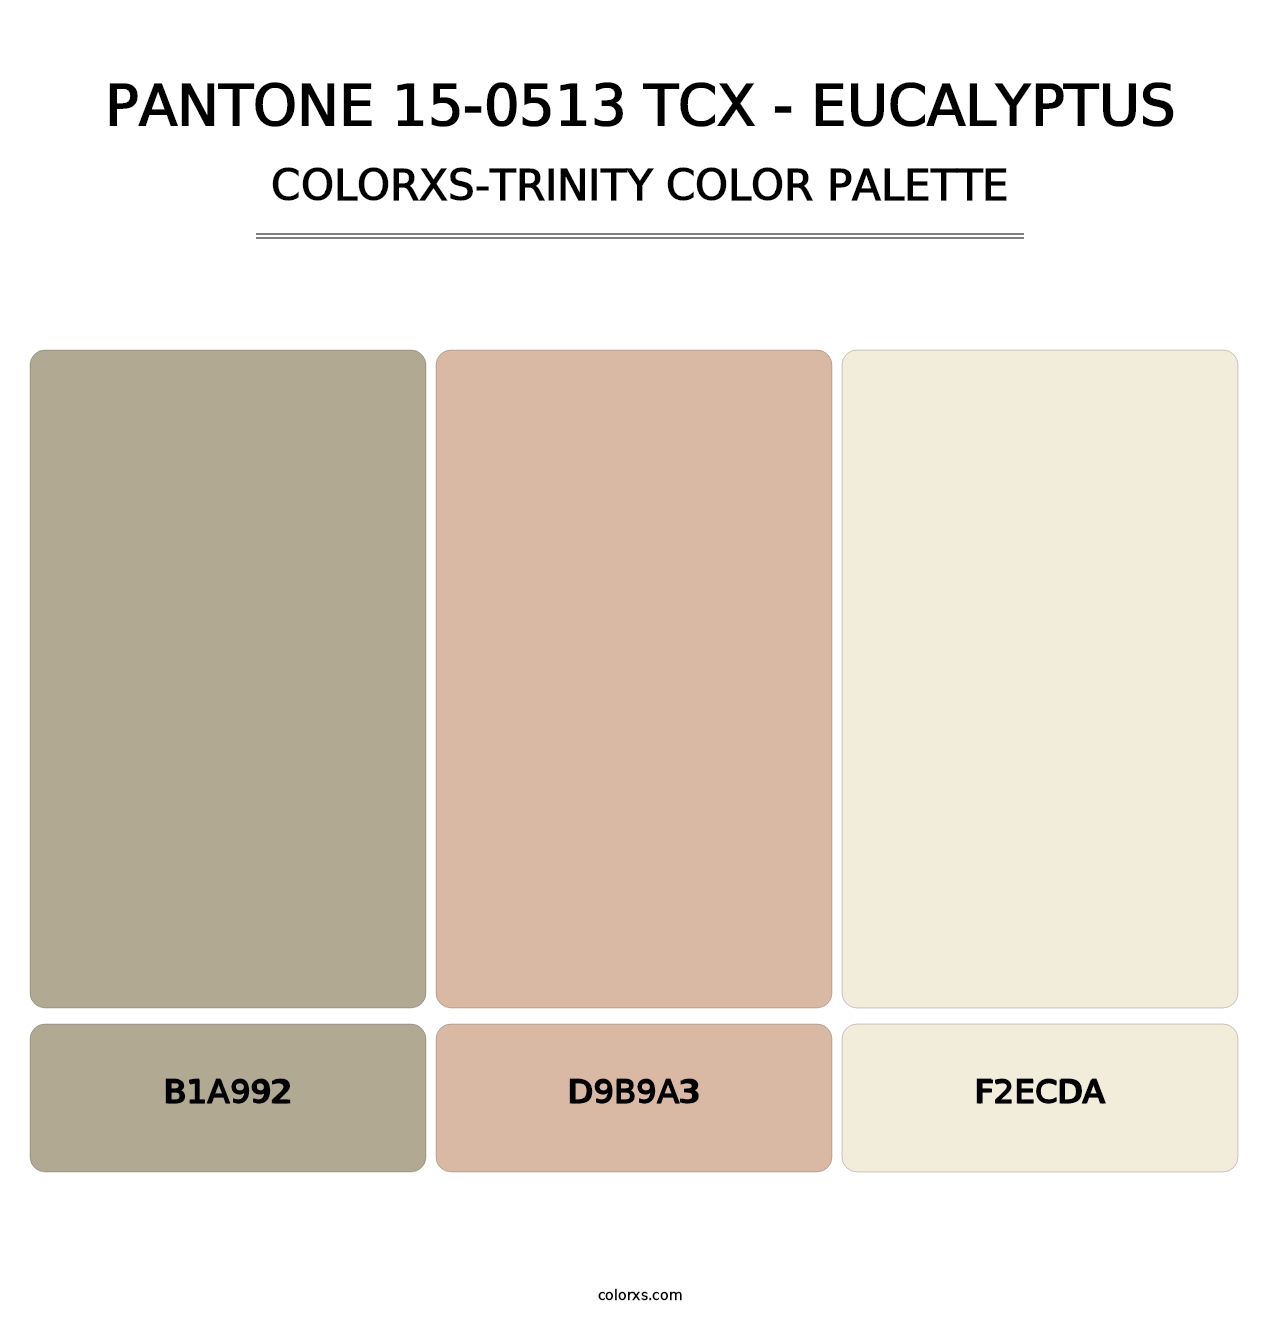 PANTONE 15-0513 TCX - Eucalyptus - Colorxs Trinity Palette